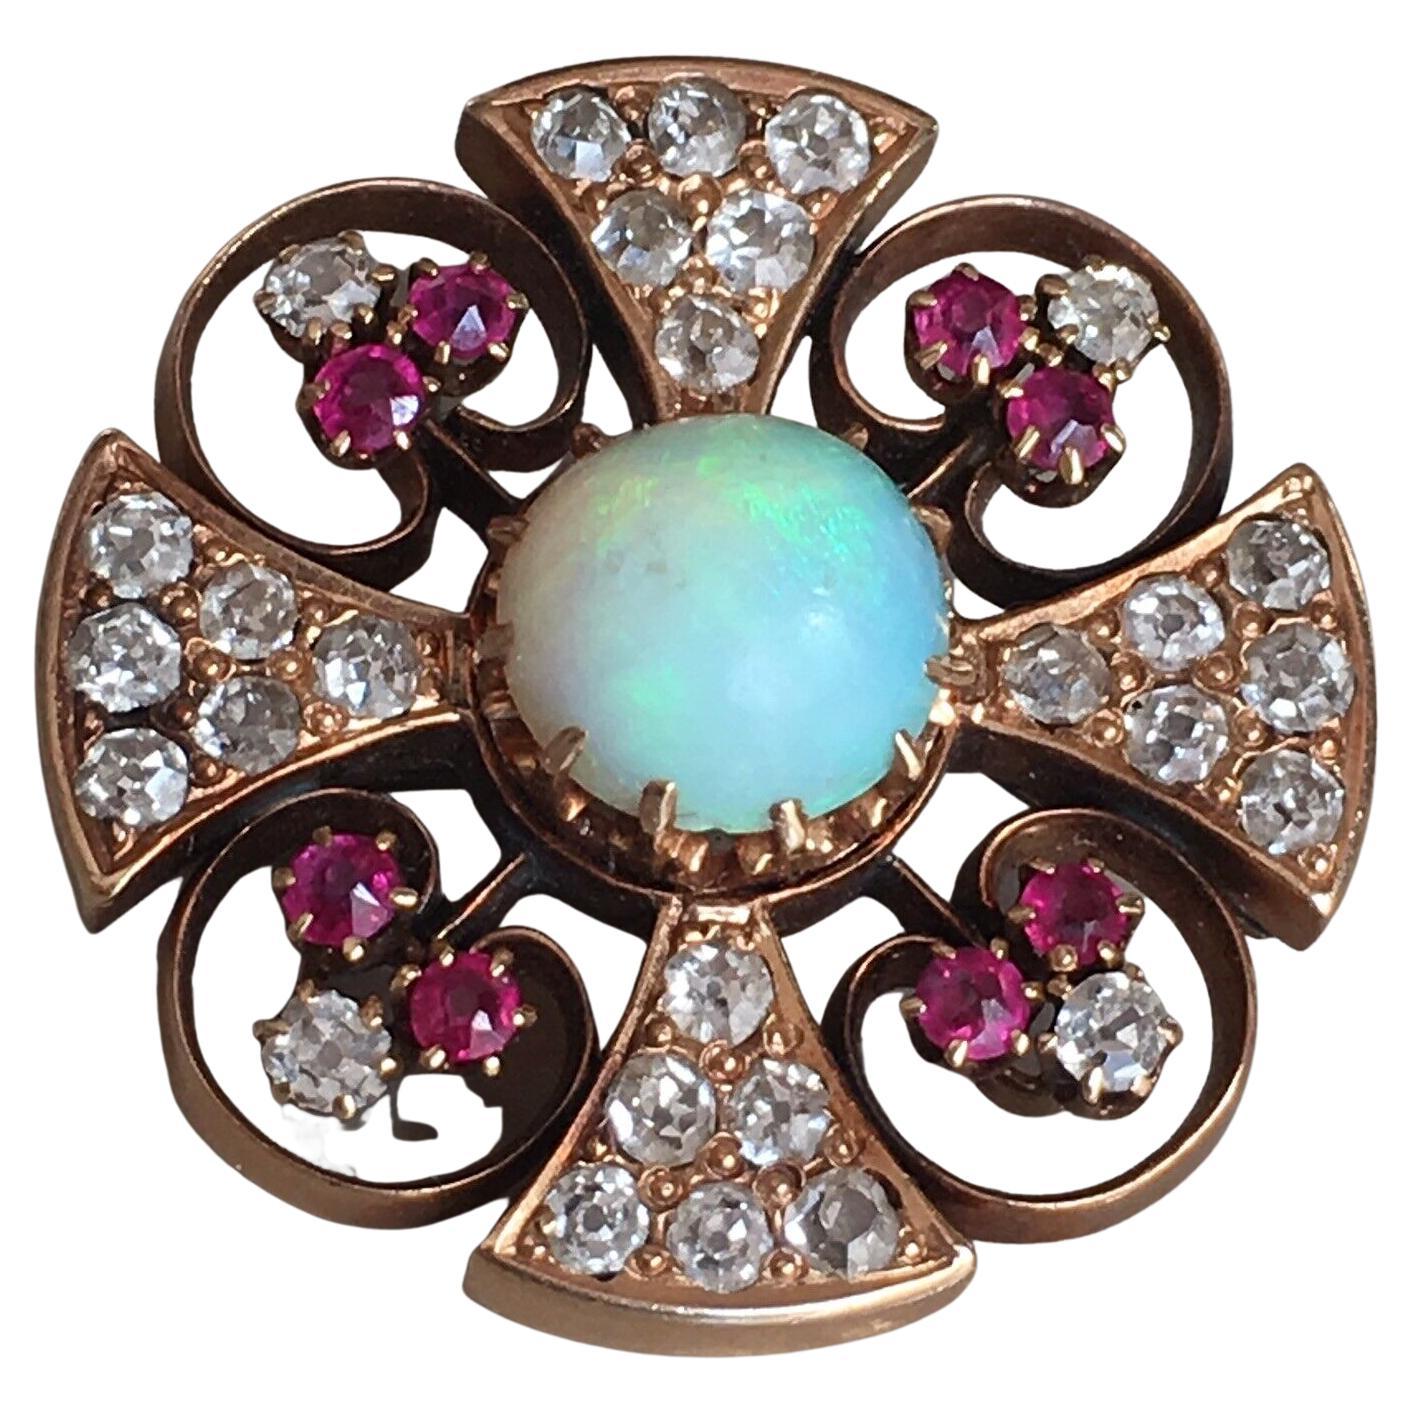 Victorian Rose Gold Diamond Opal Ruby Pendant-Brooch 1890s American